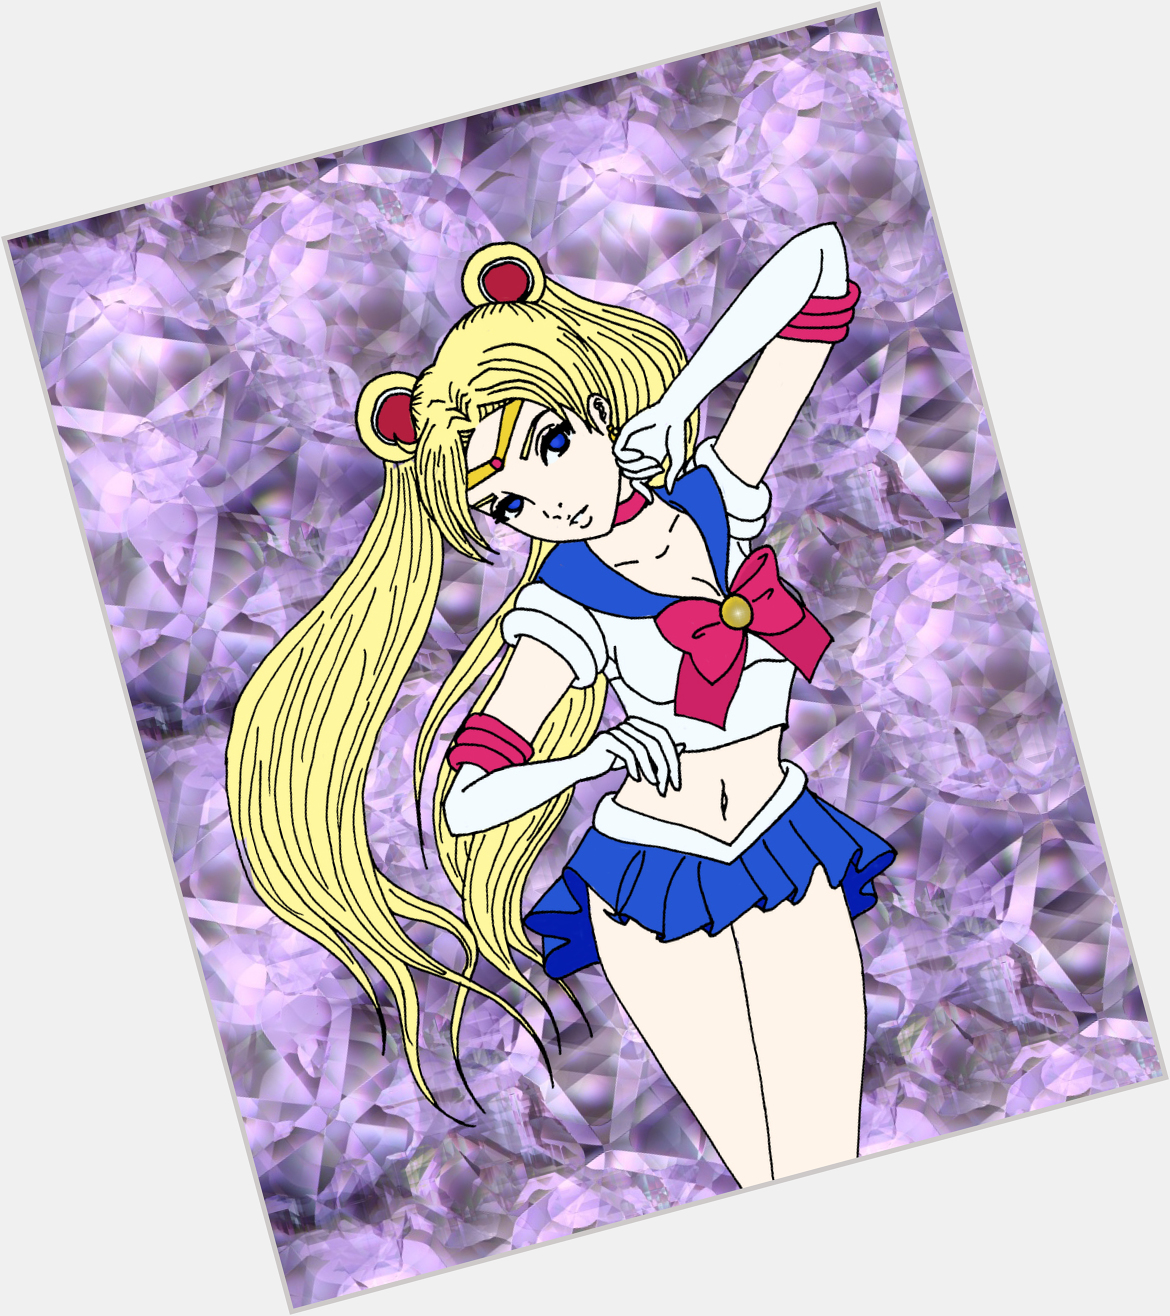 <a href="/hot-women/sailor-moon/is-she-good-crystal-remake-anime-princess-english">Sailor Moon</a> Slim body,  blonde hair & hairstyles